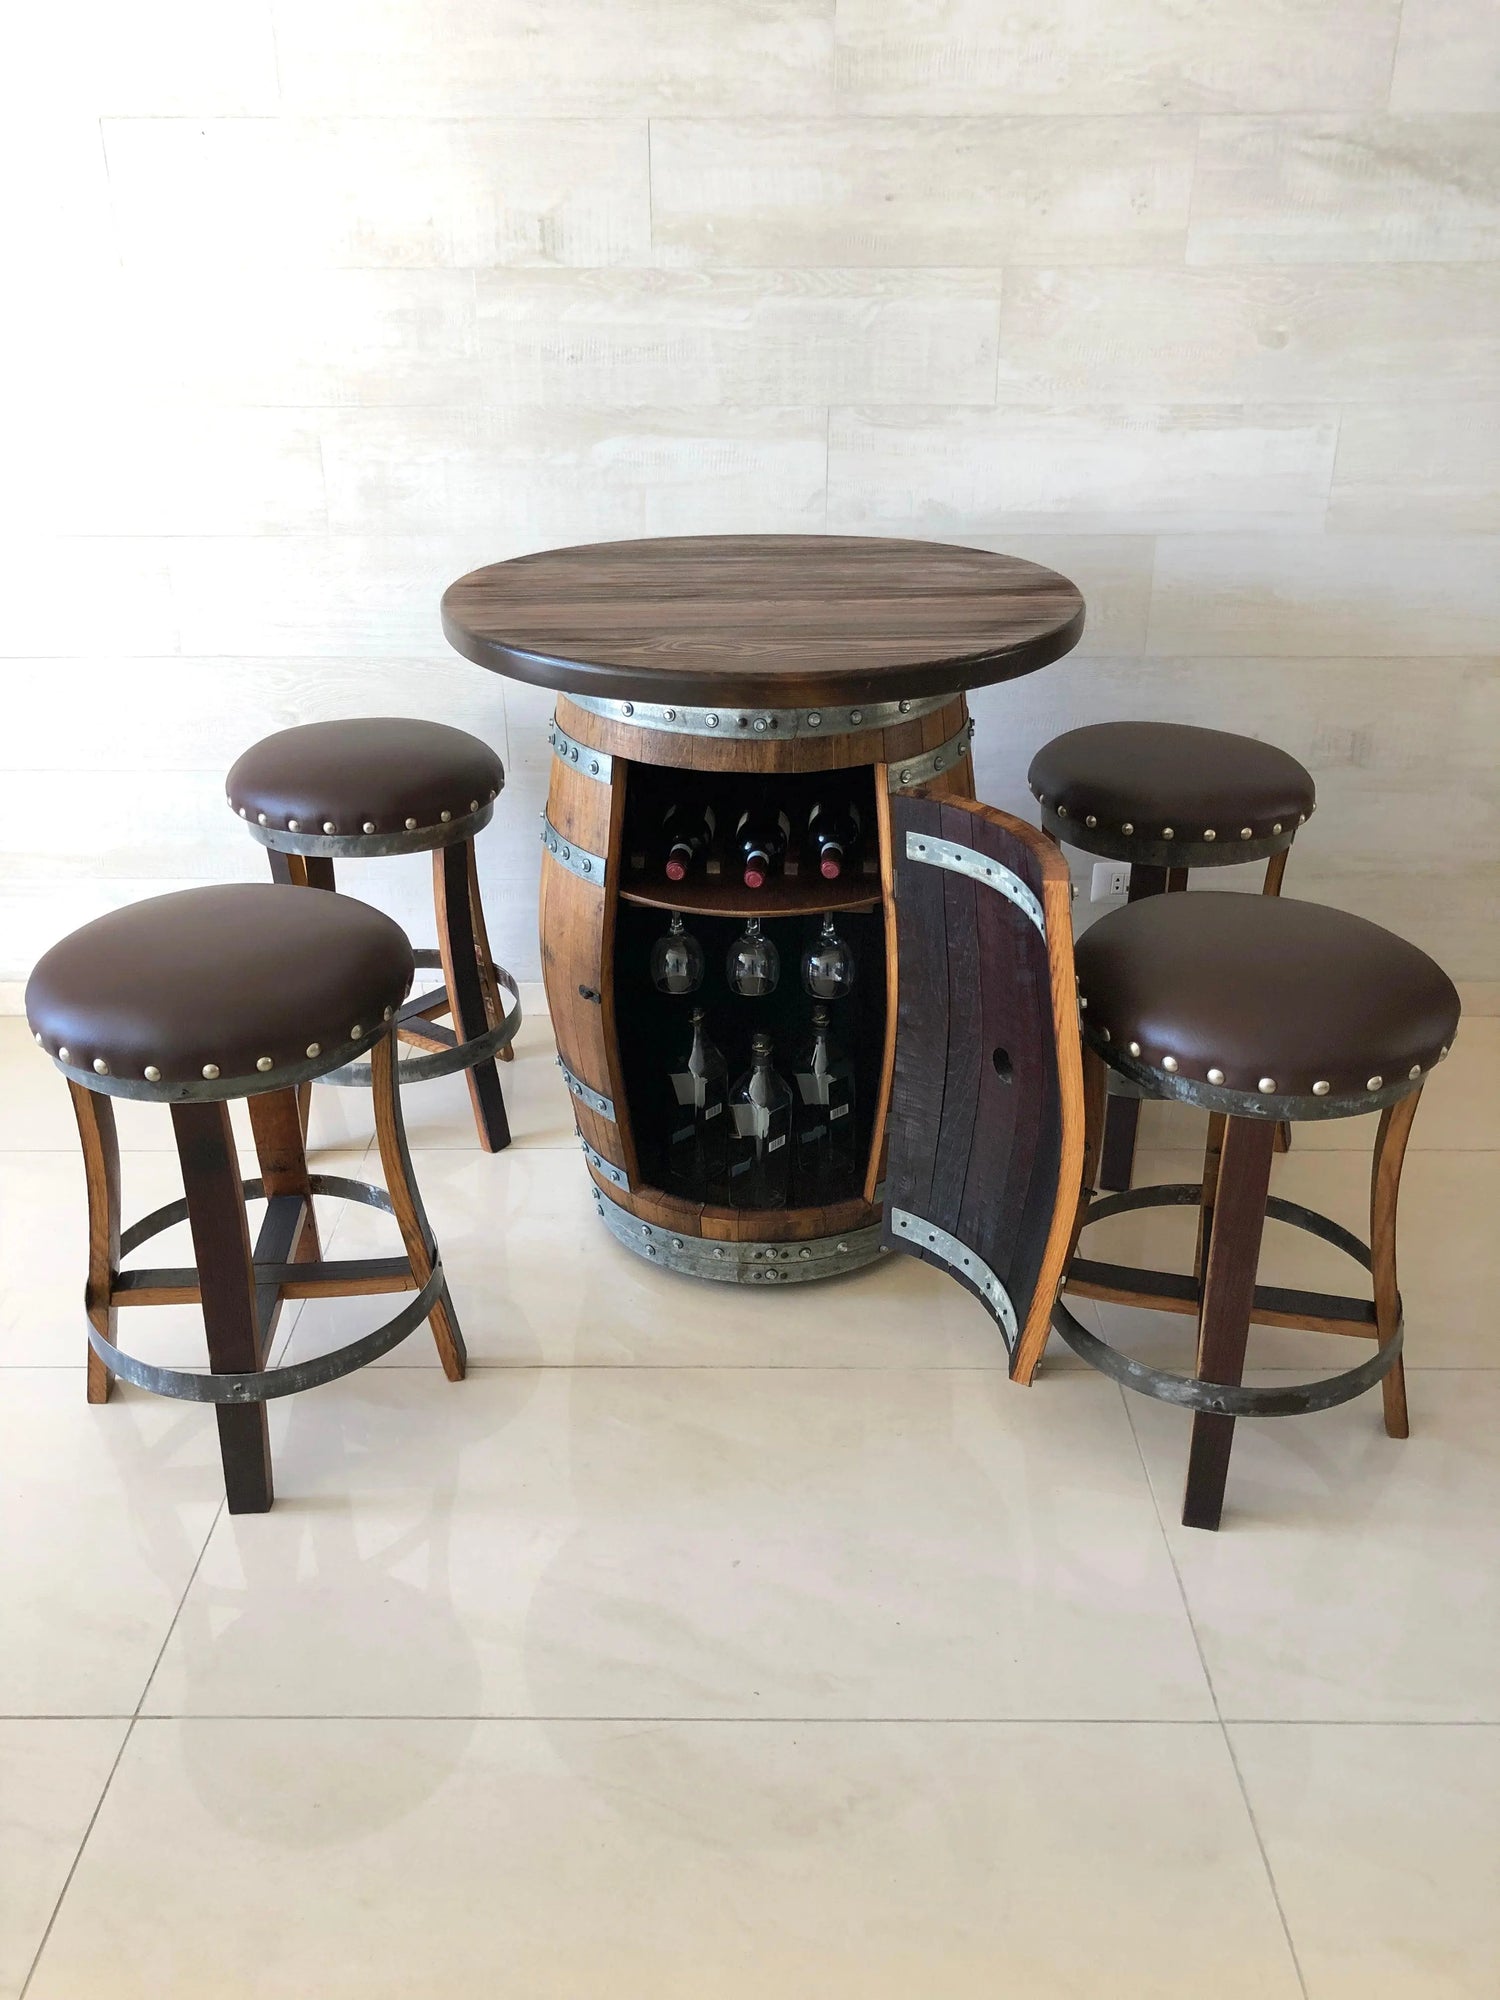 Wine barrel furniture for the office - Oak Wood Wine Barrels